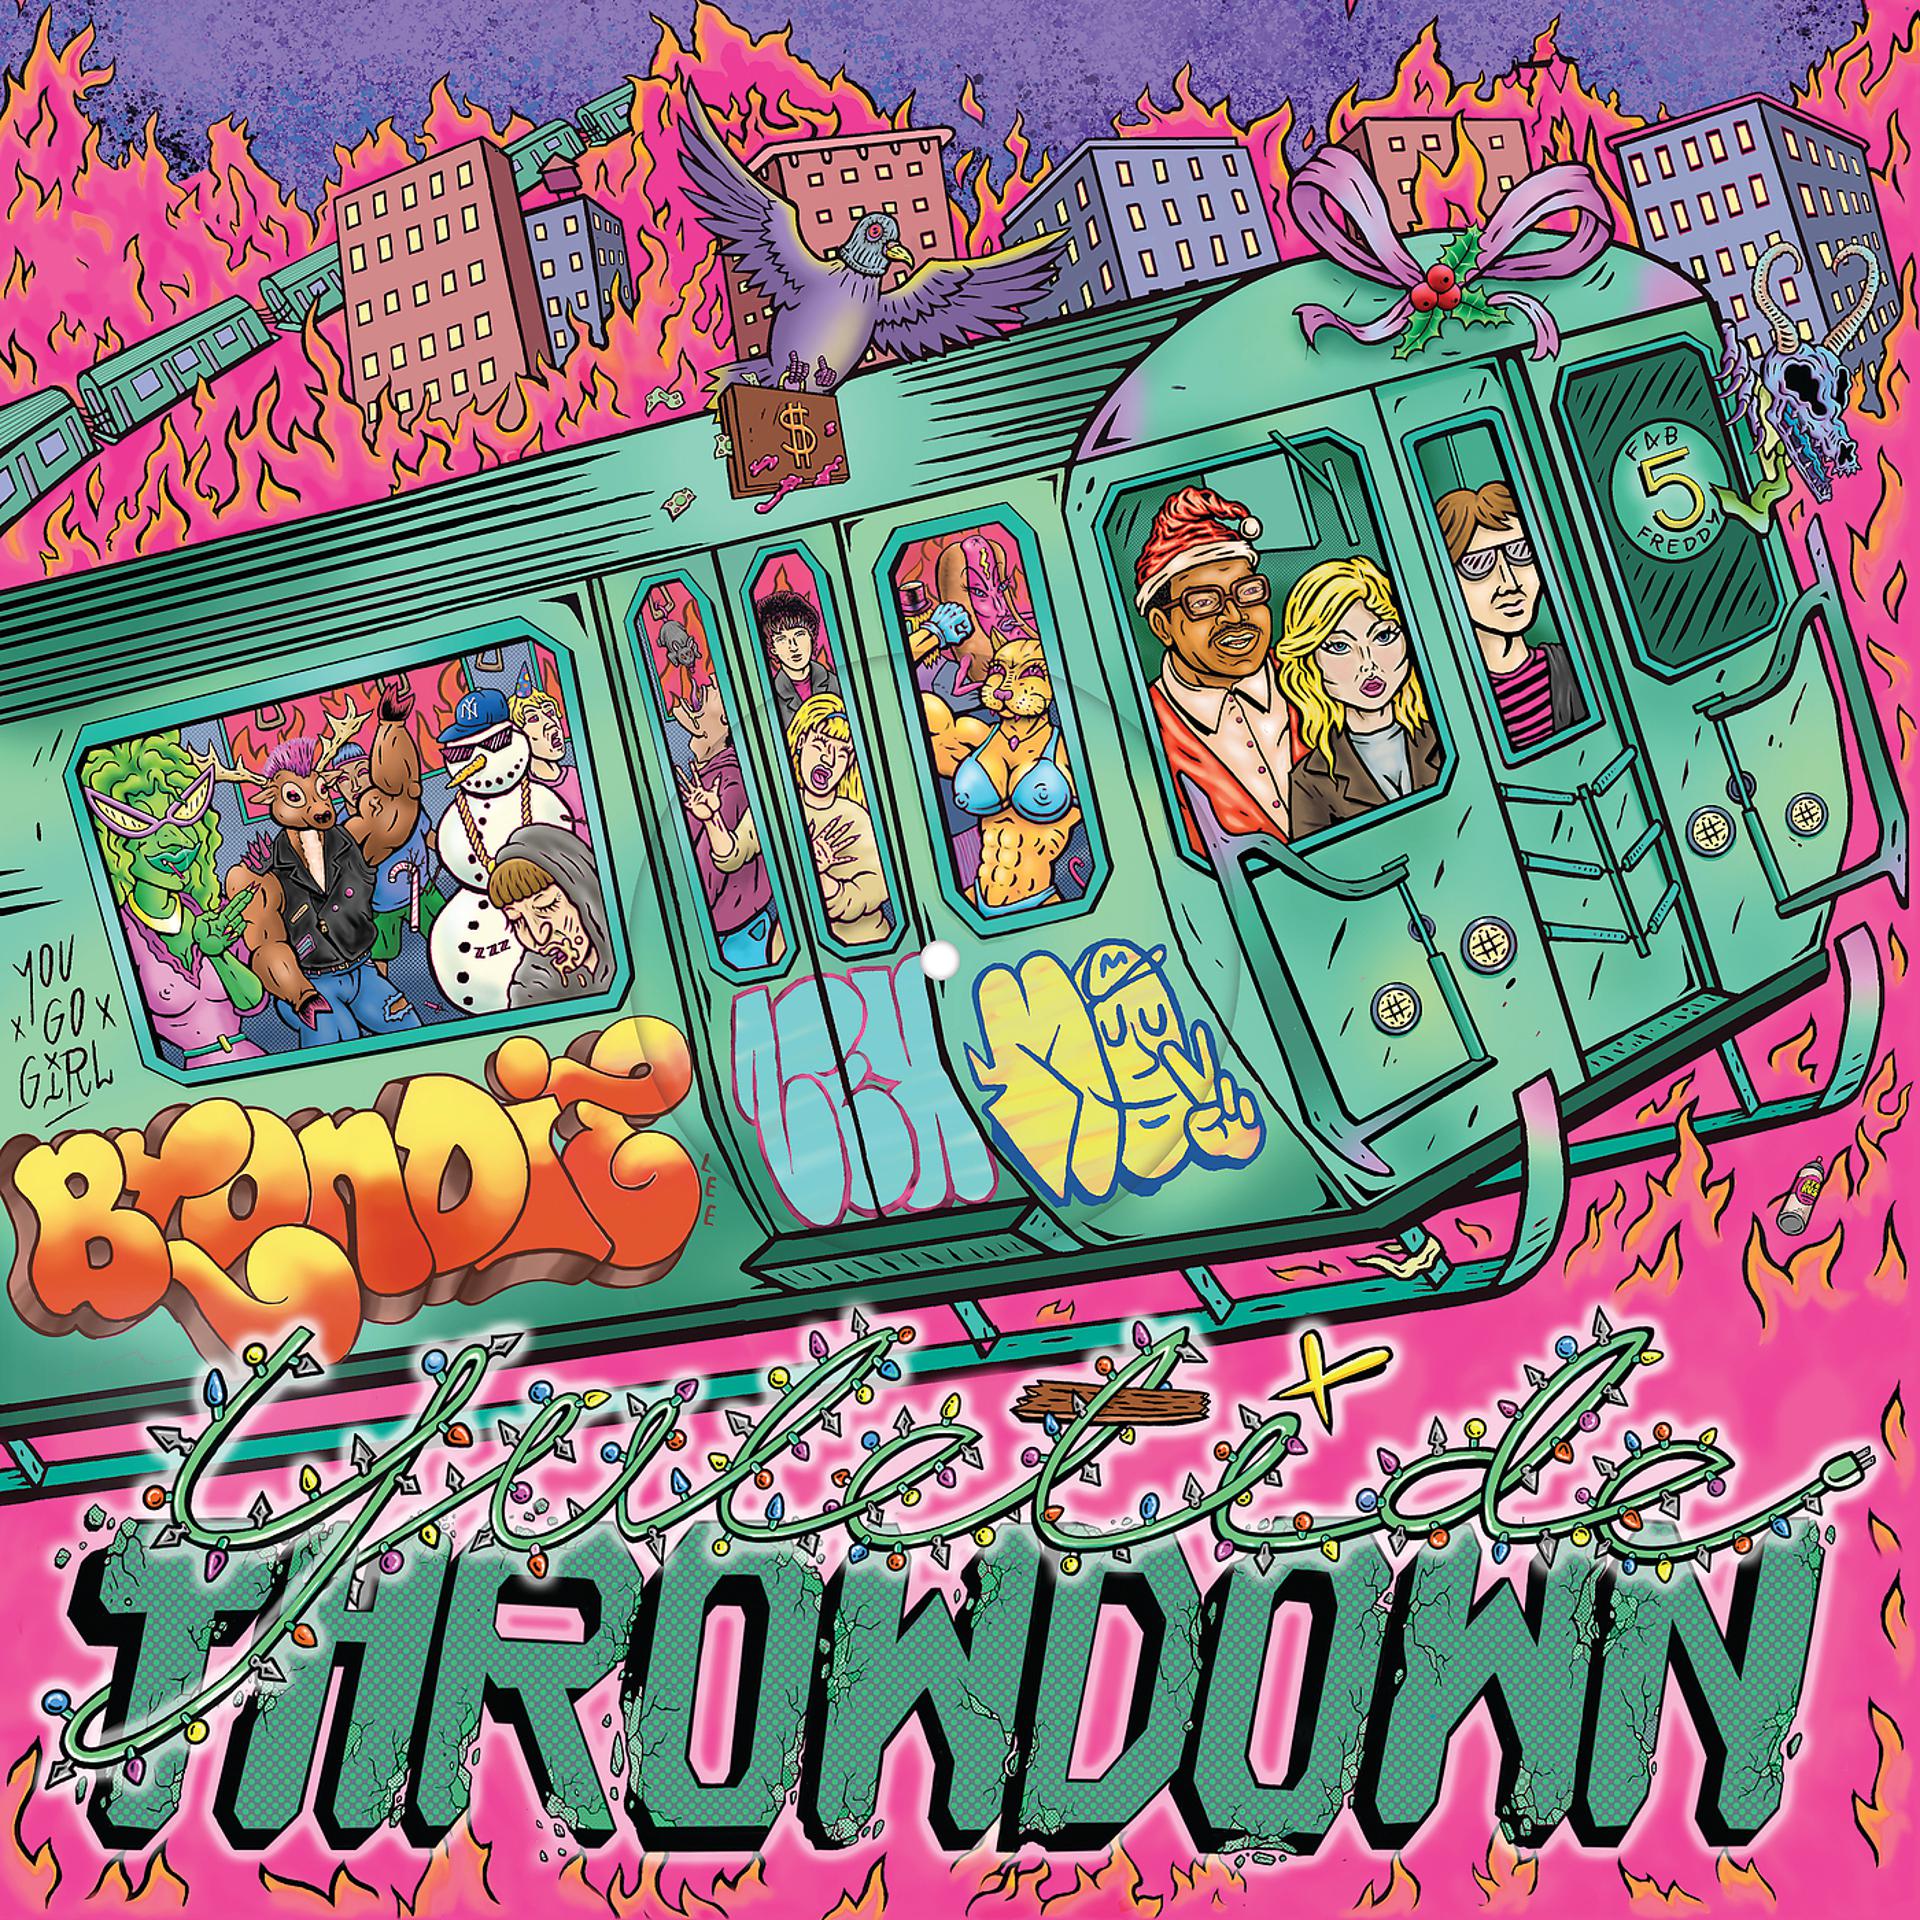 Постер к треку Blondie, Fab 5 Freddy - Yuletide Throwdown (Cut Chemist Remix)